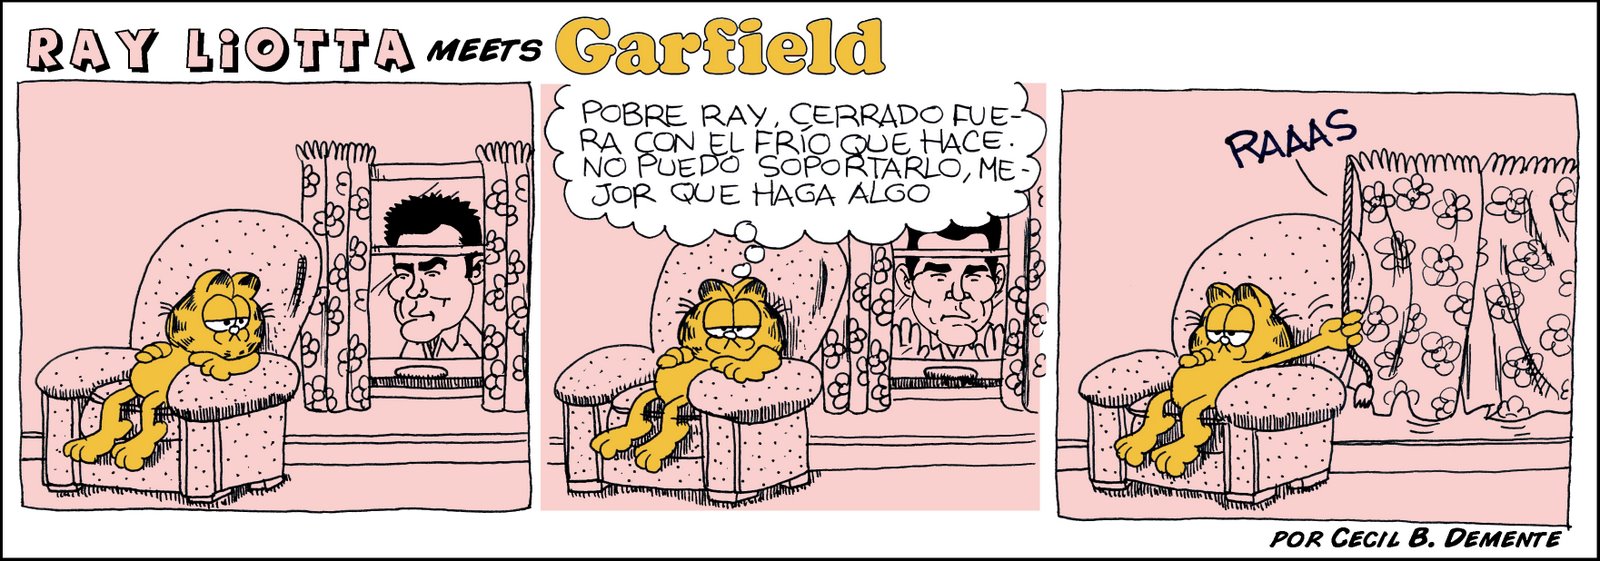 [Ray+Liotta+meets+Garfield+4.jpg]